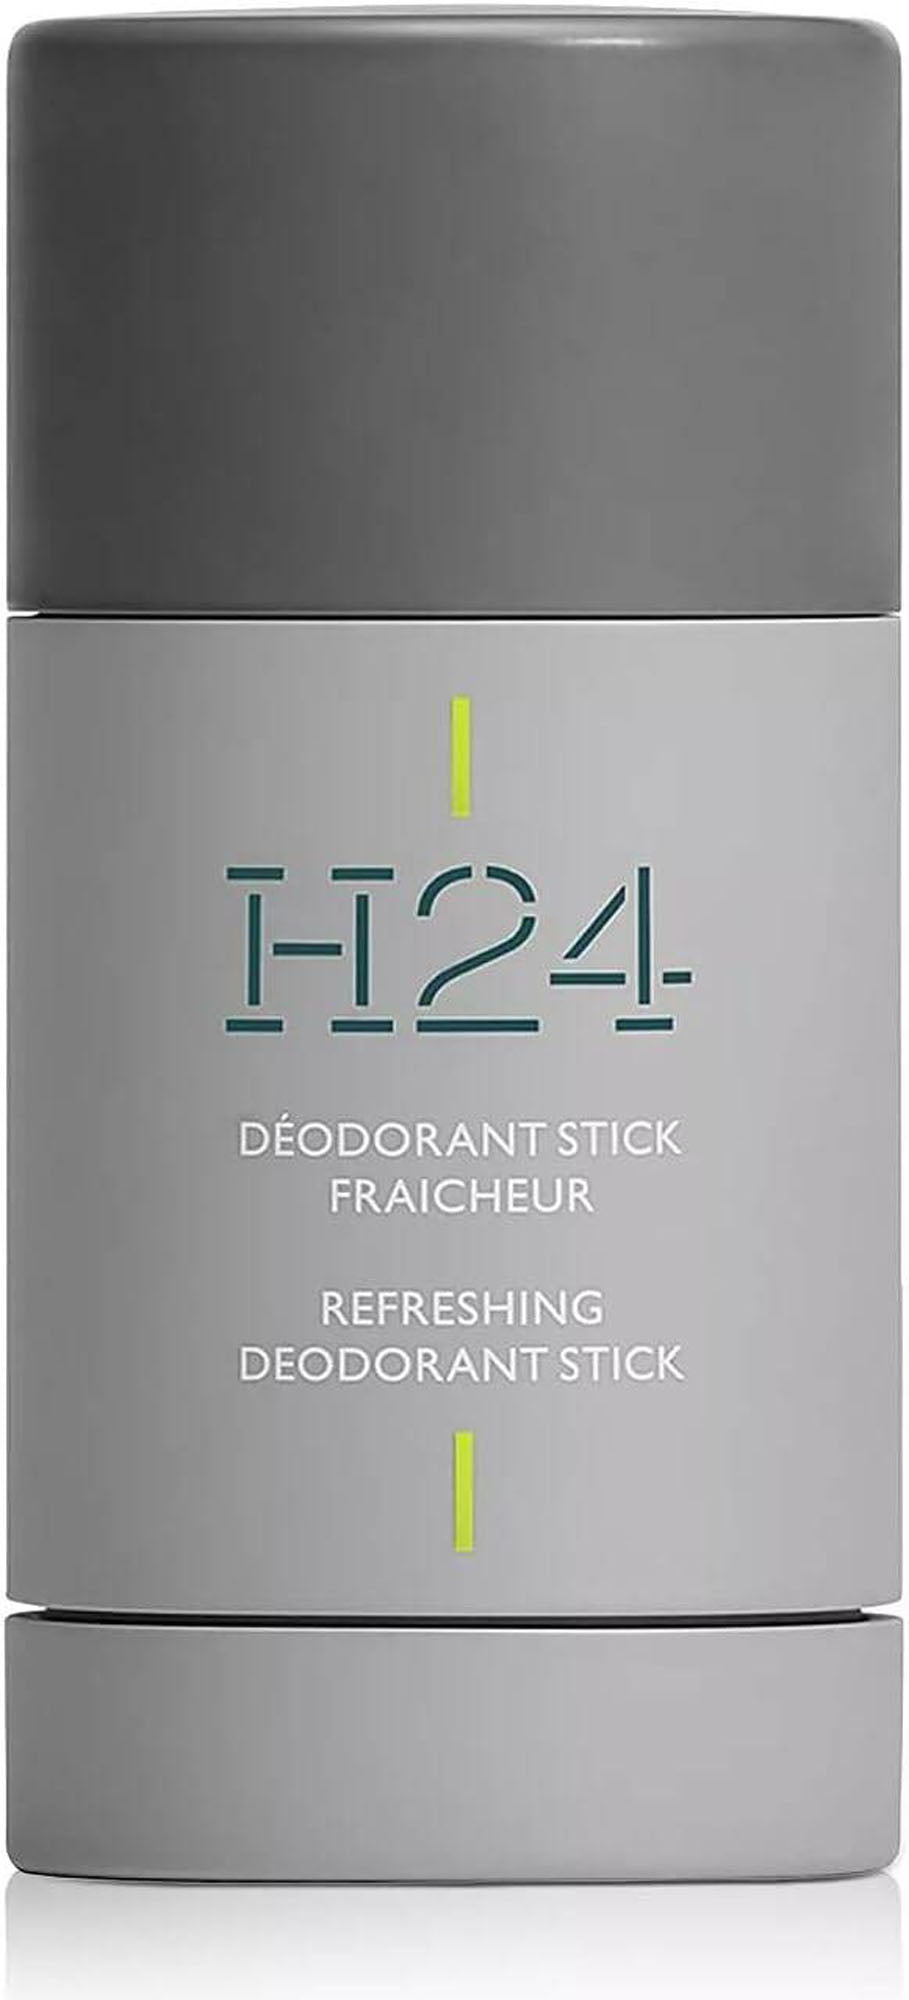 Stick déodorant 24 heures